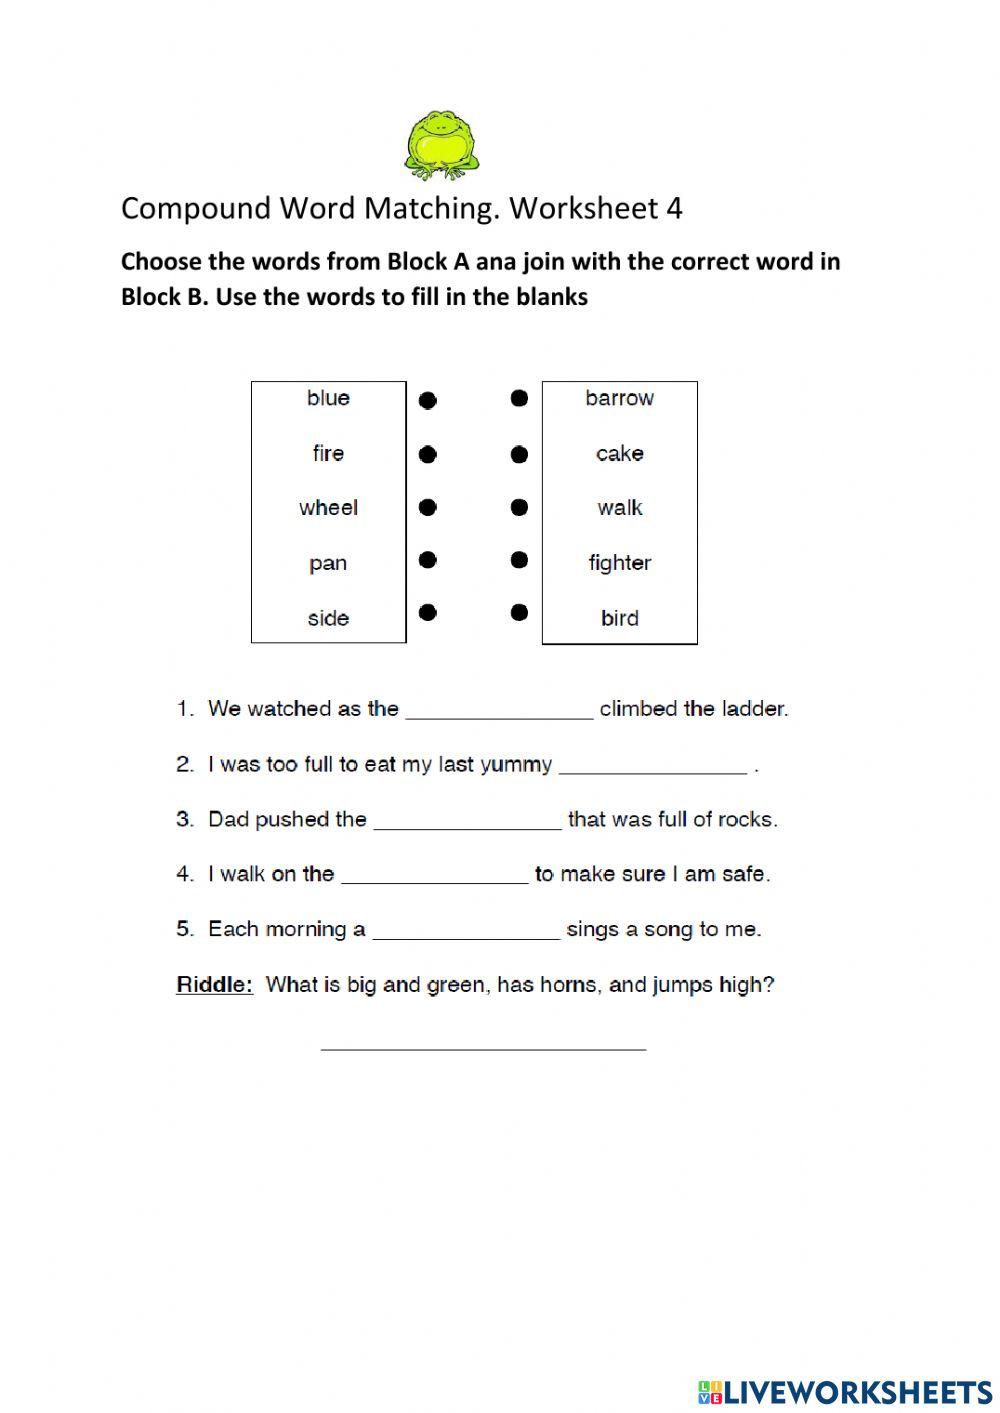 Compound Word Matching Worksheet 4